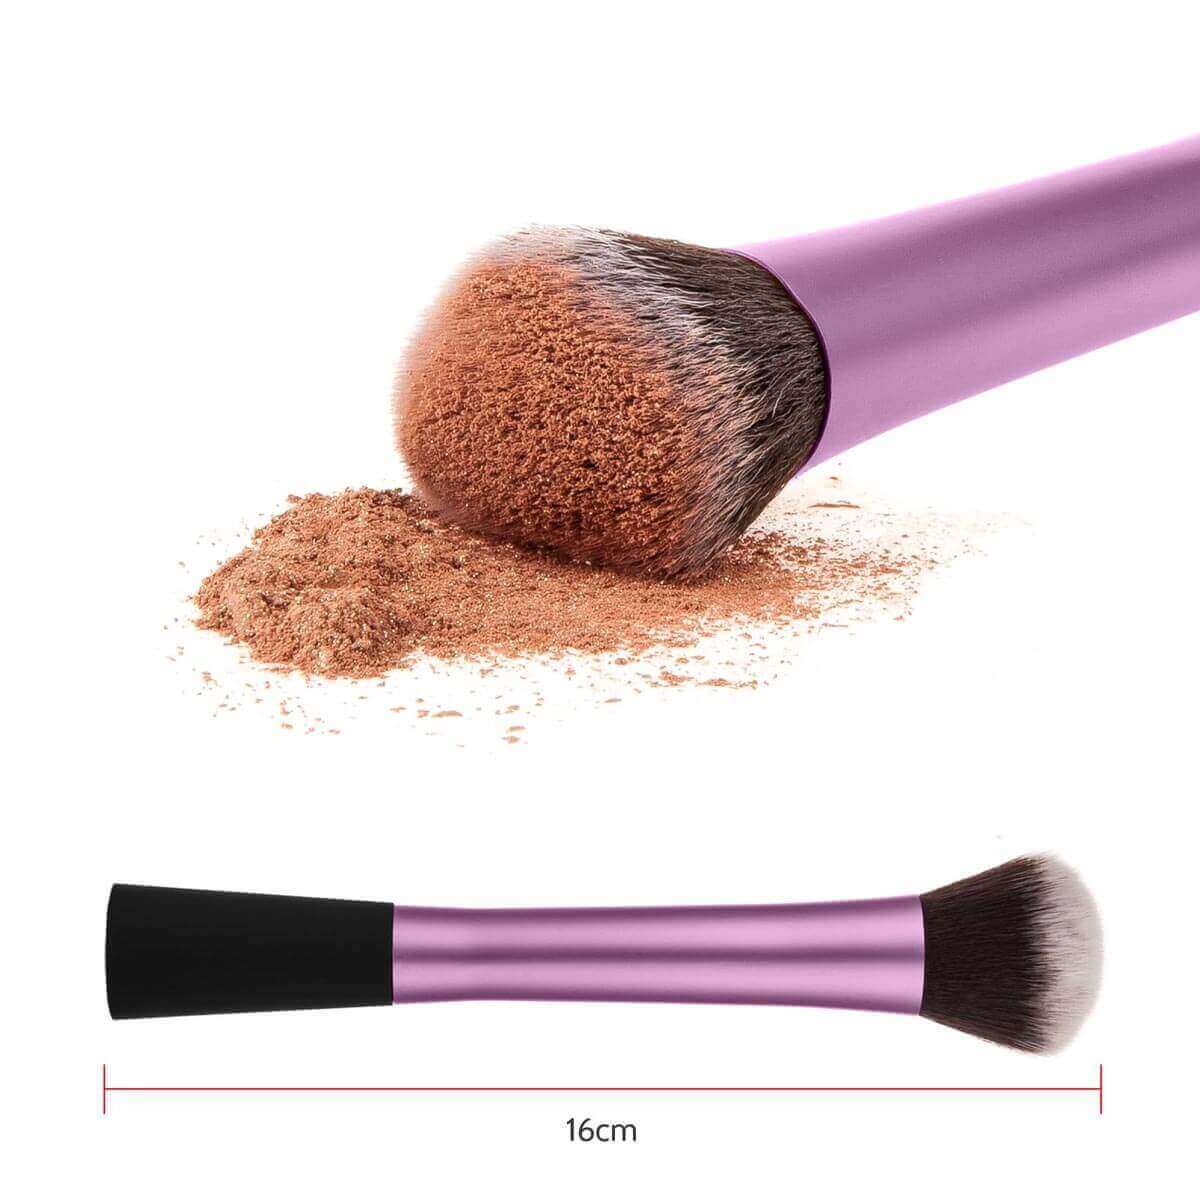 Savisto Essentials Uk Makeup Brushes Set Purple 6 Brushes Included